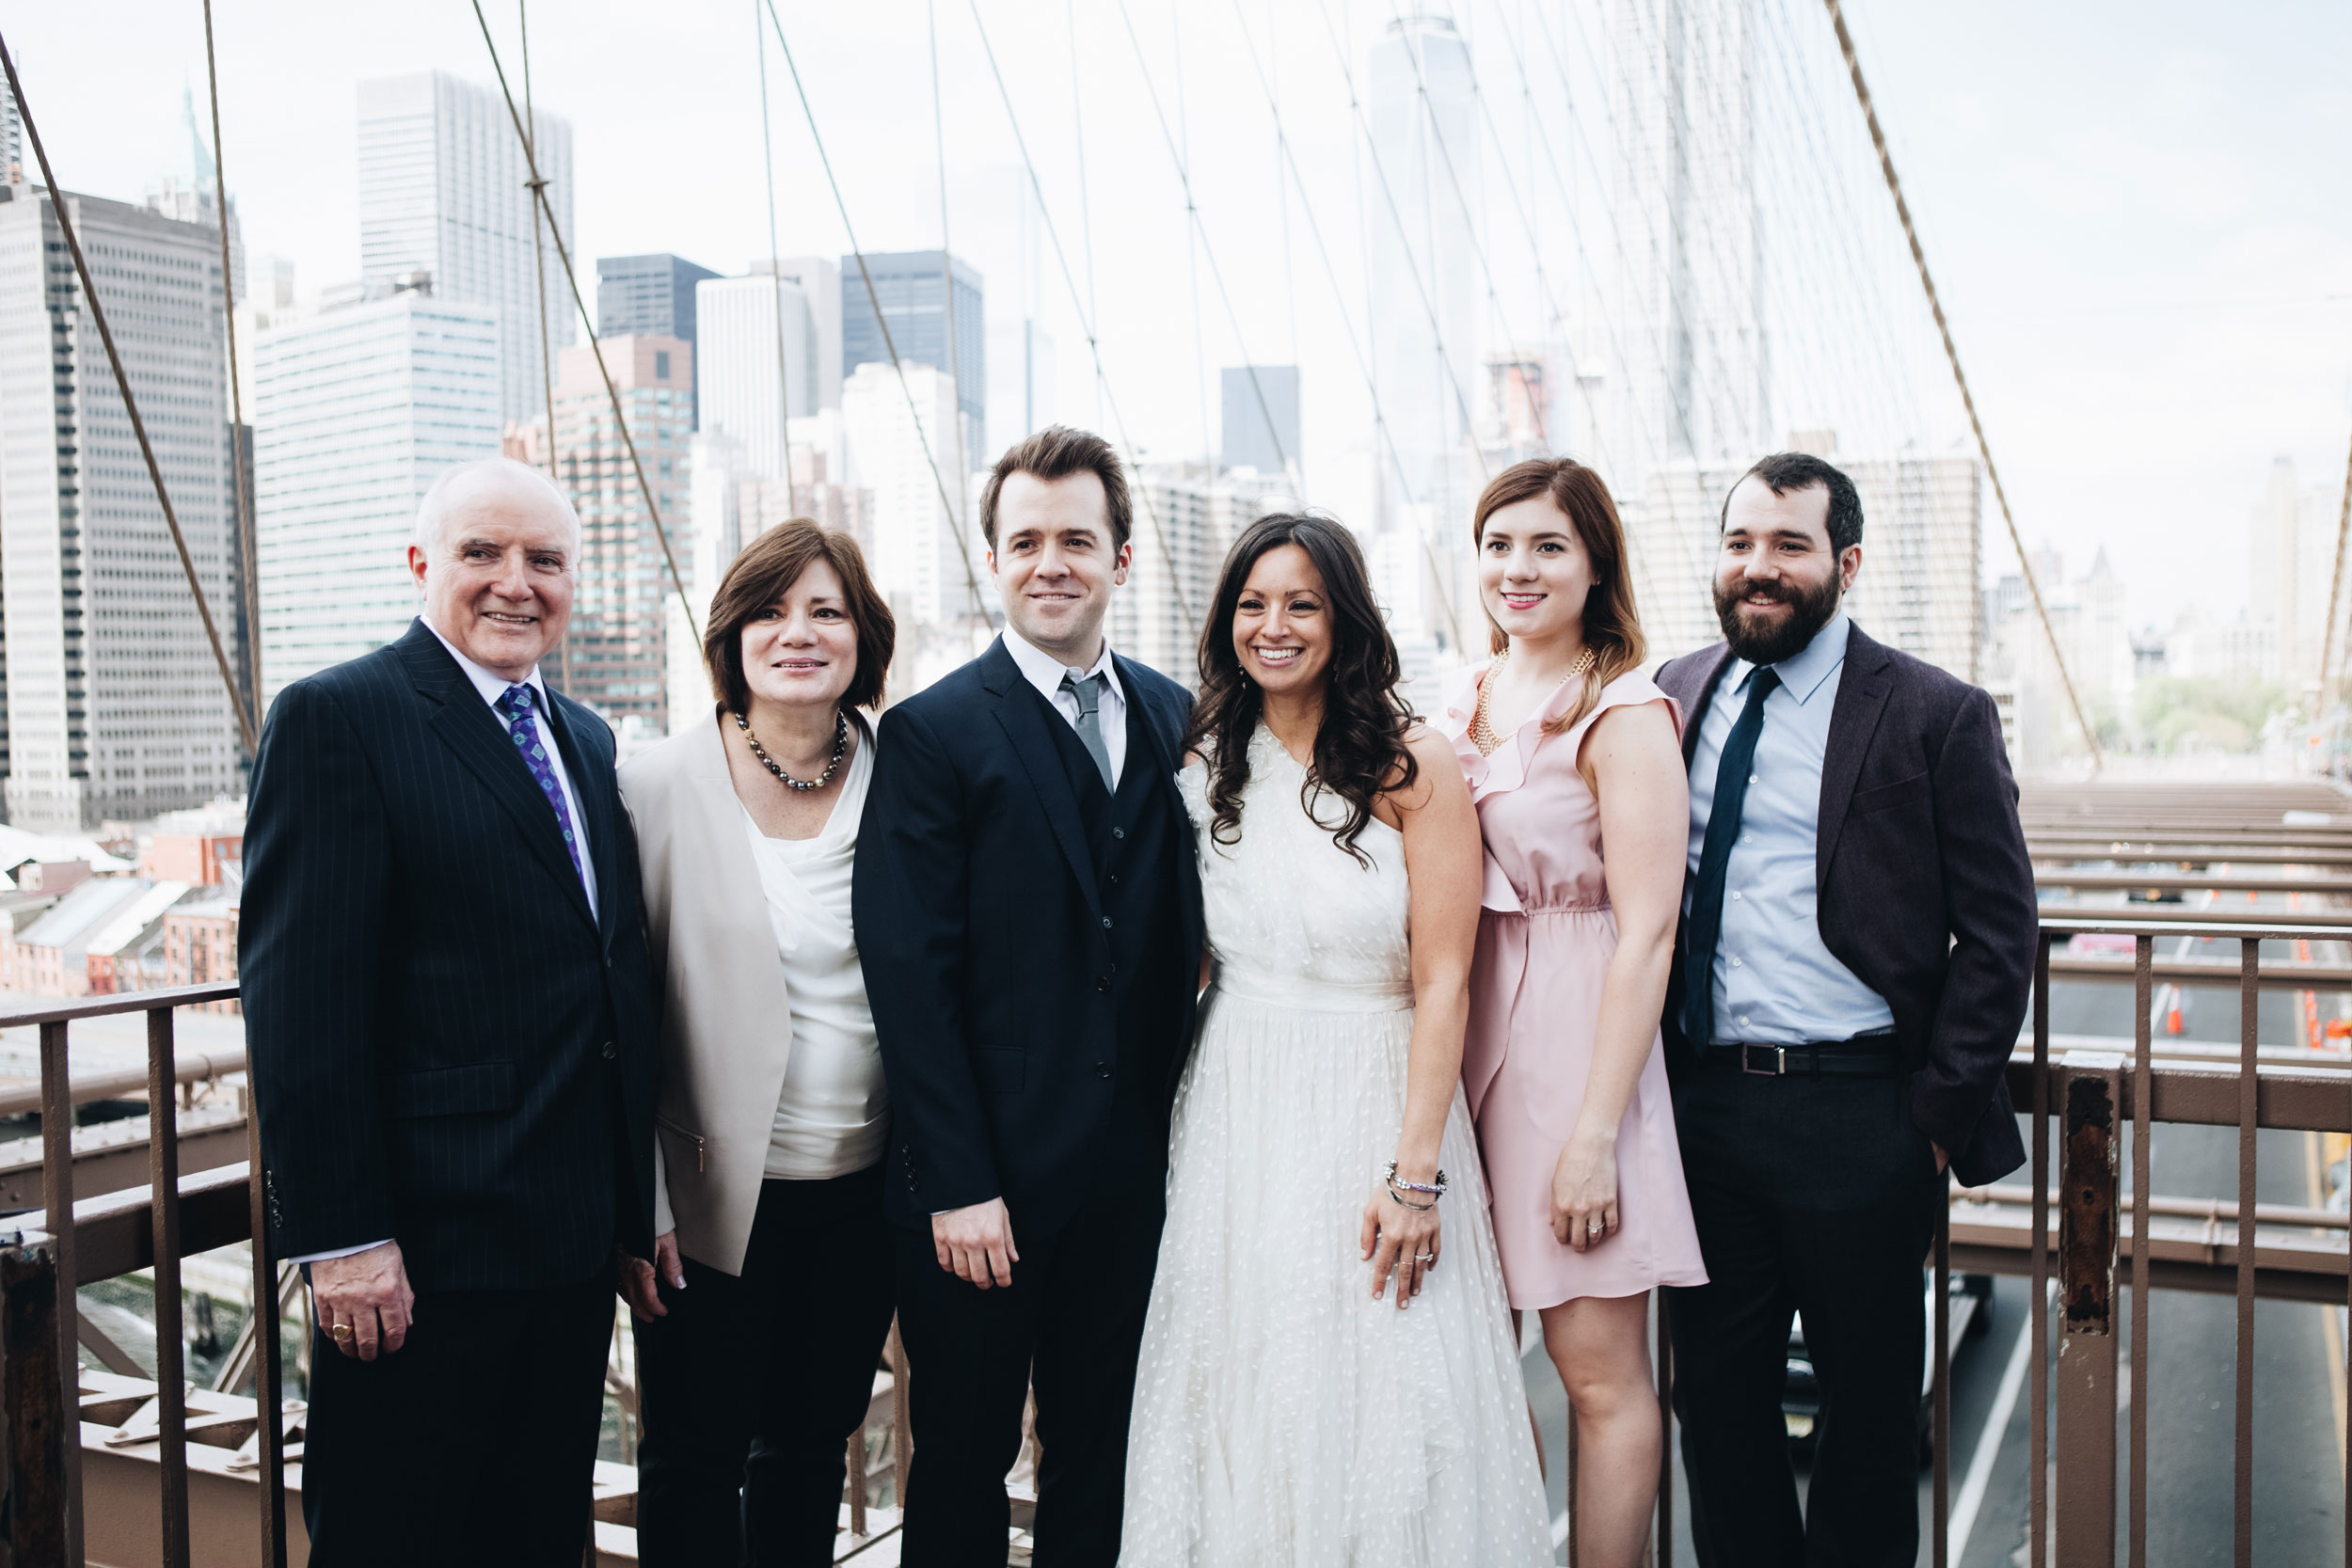 Family portraits on the Brooklyn Bridge